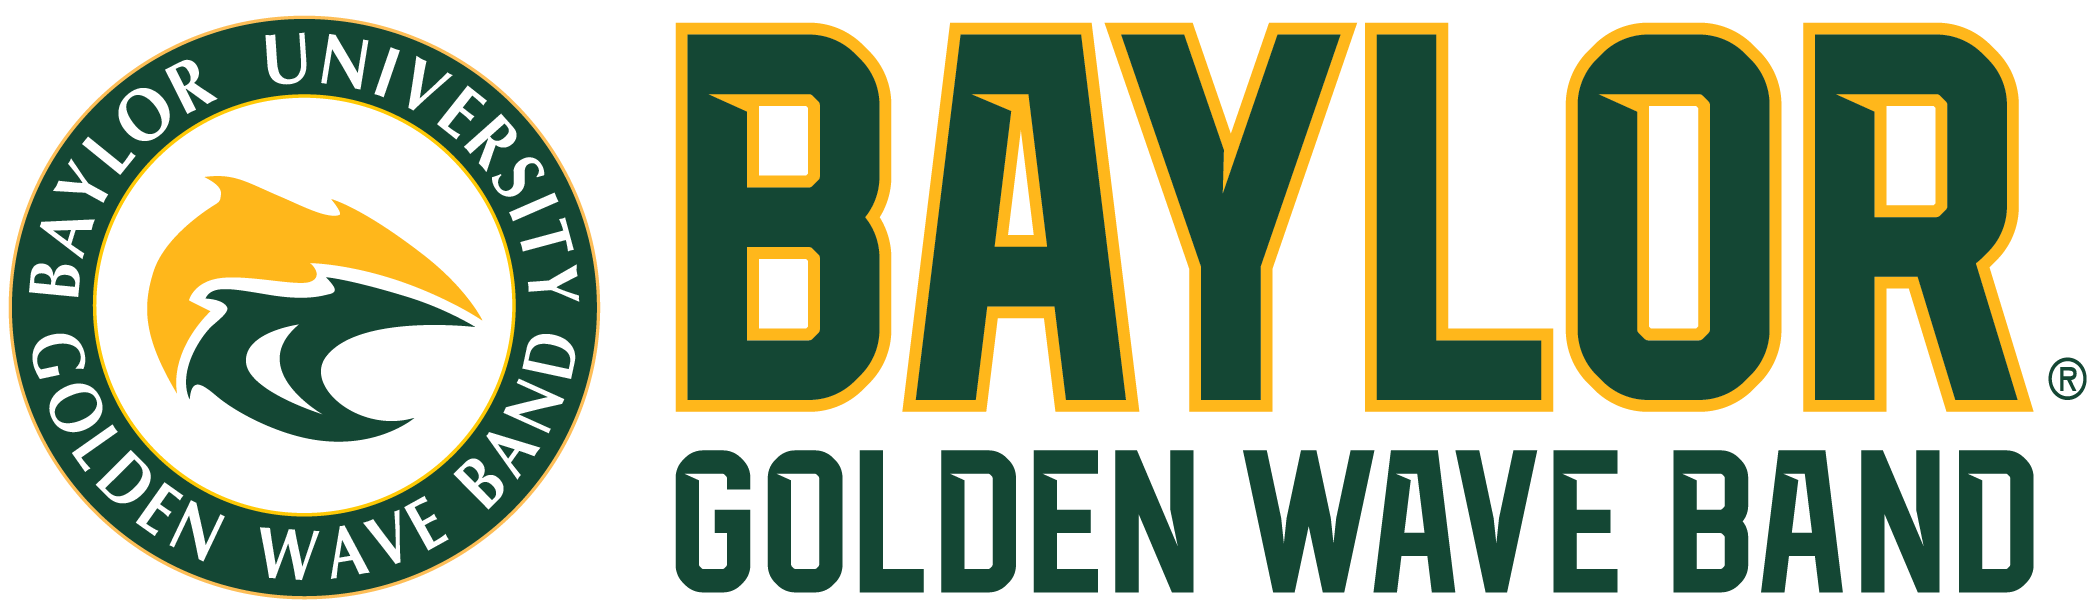 Baylor University Golden Wave Band logo